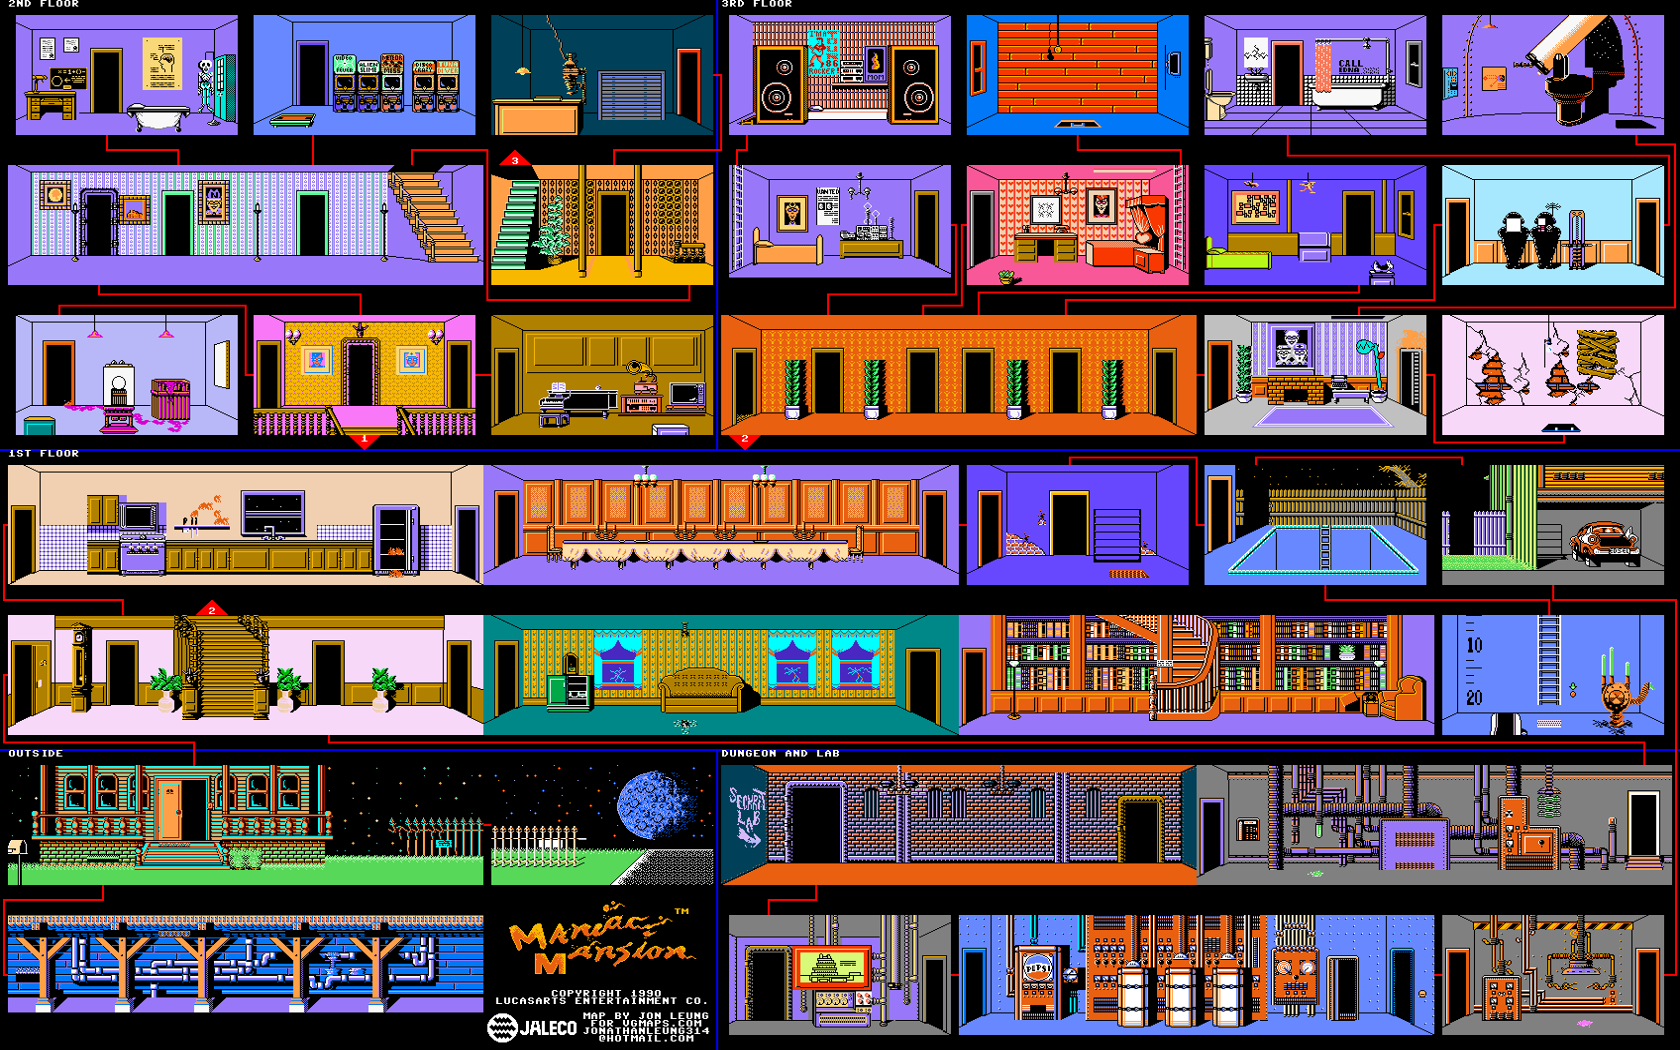 Download Video Games Wallpaper - Maniac Mansion Nes Map - HD Wallpaper 